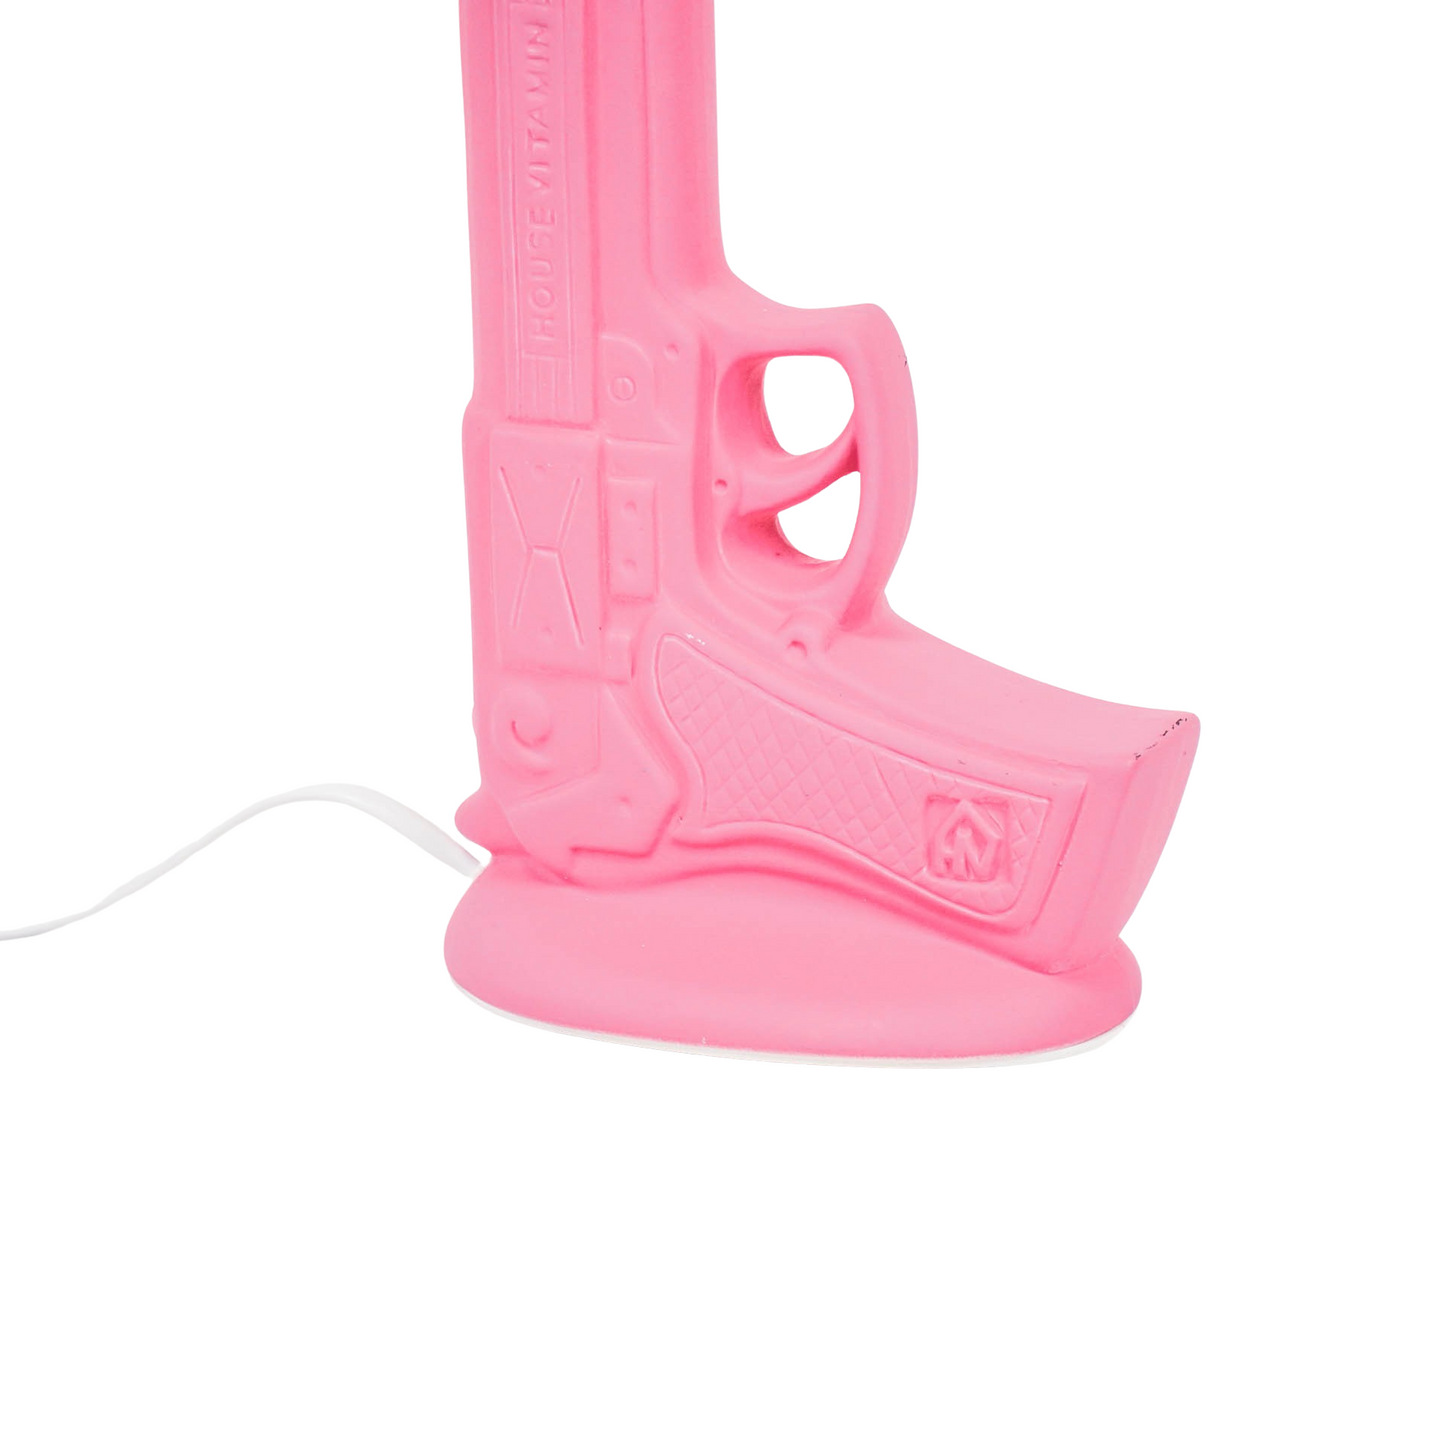 Table Lamp - Gun - Ceramic - Neon Pink - E27 - 15x9x32cm